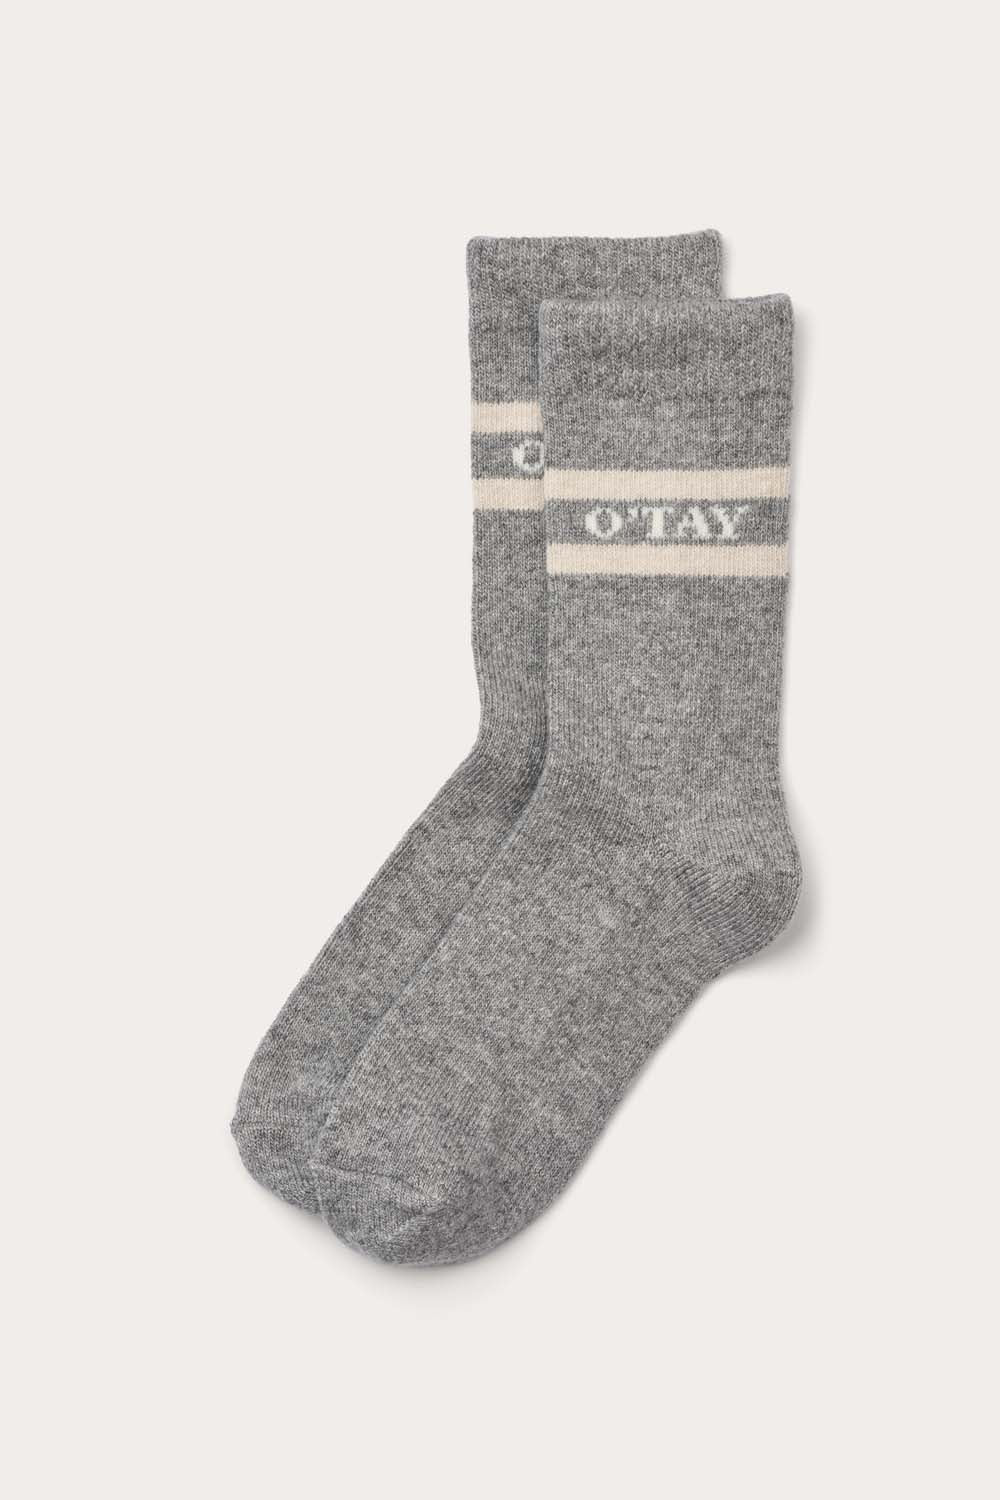 O'TAY Elvira Socks Socks Riverstone